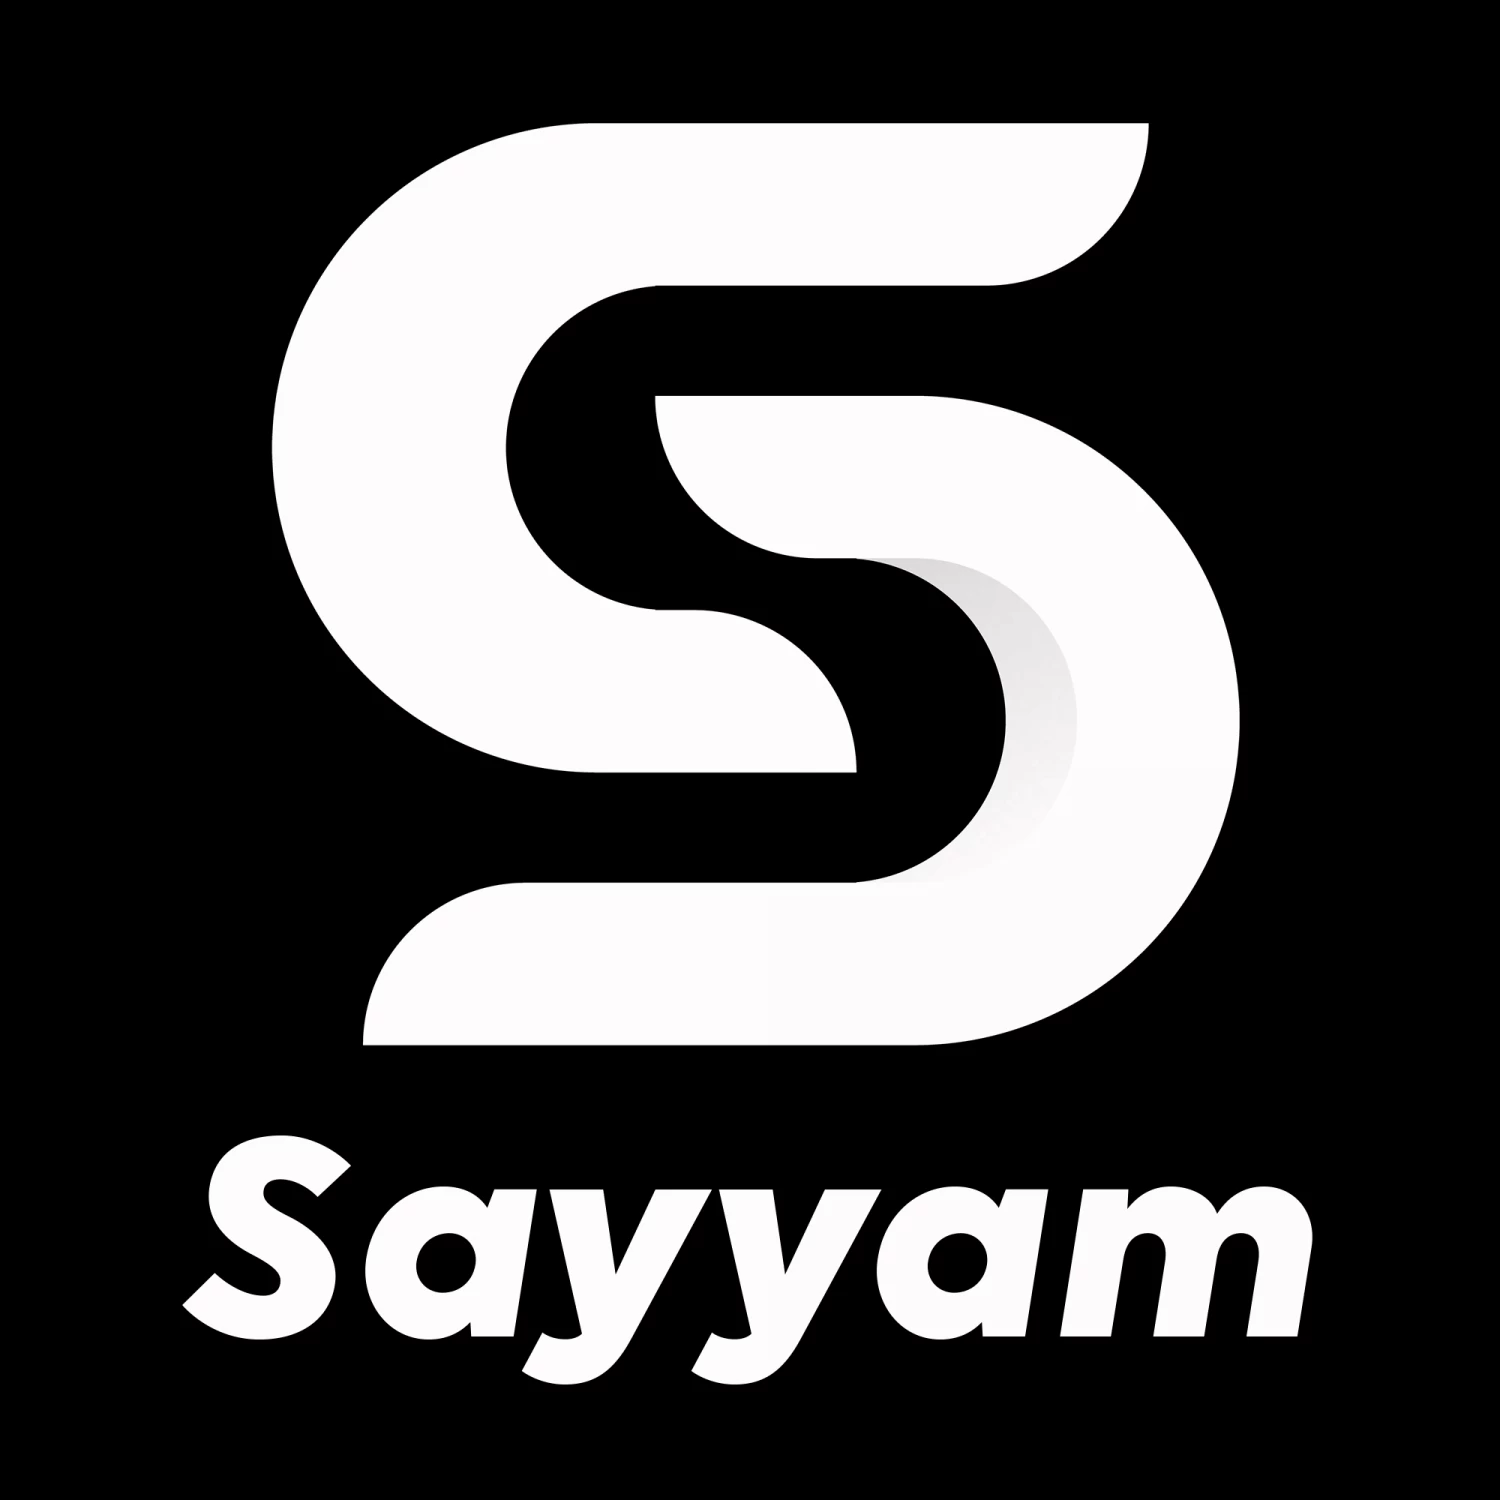 Sayyam